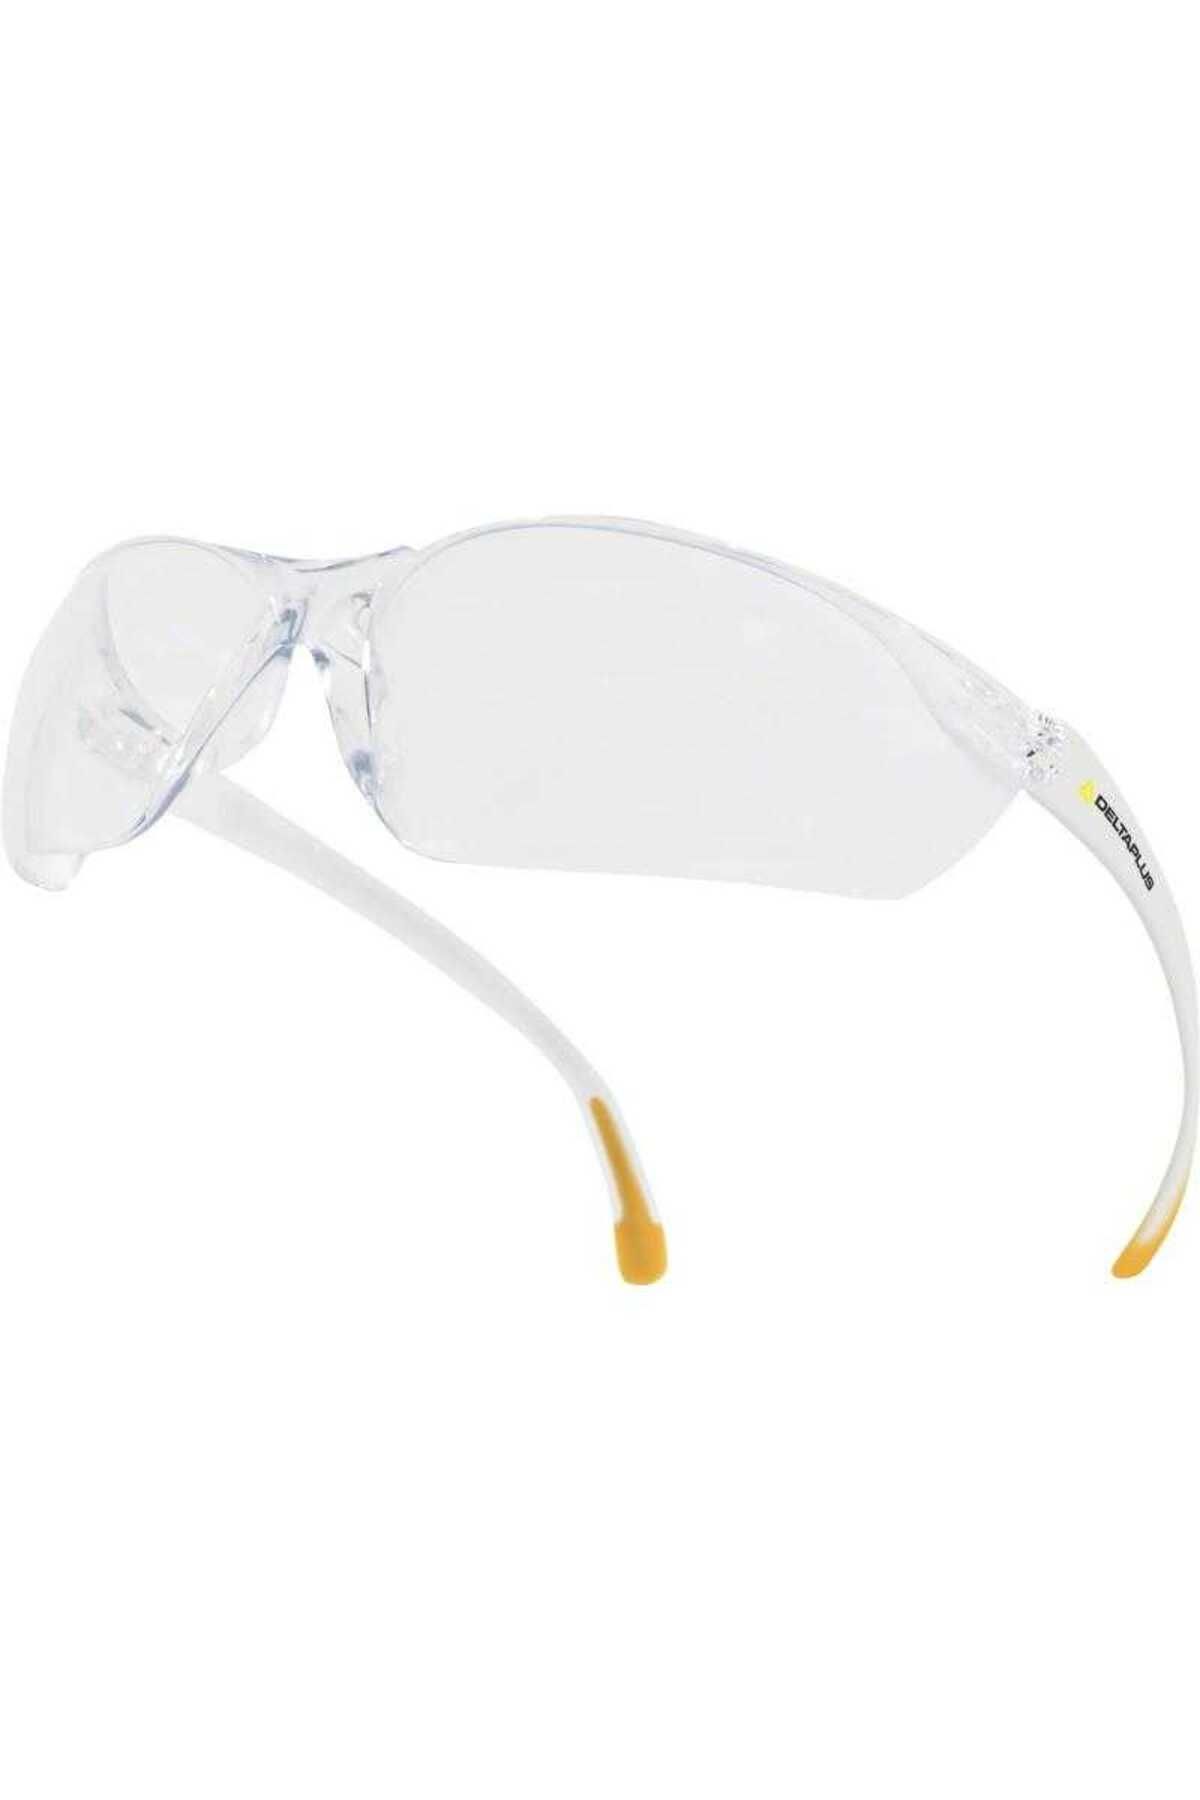 Delta Plus Meia Clear Şeffaf Çapak Gözlüğü